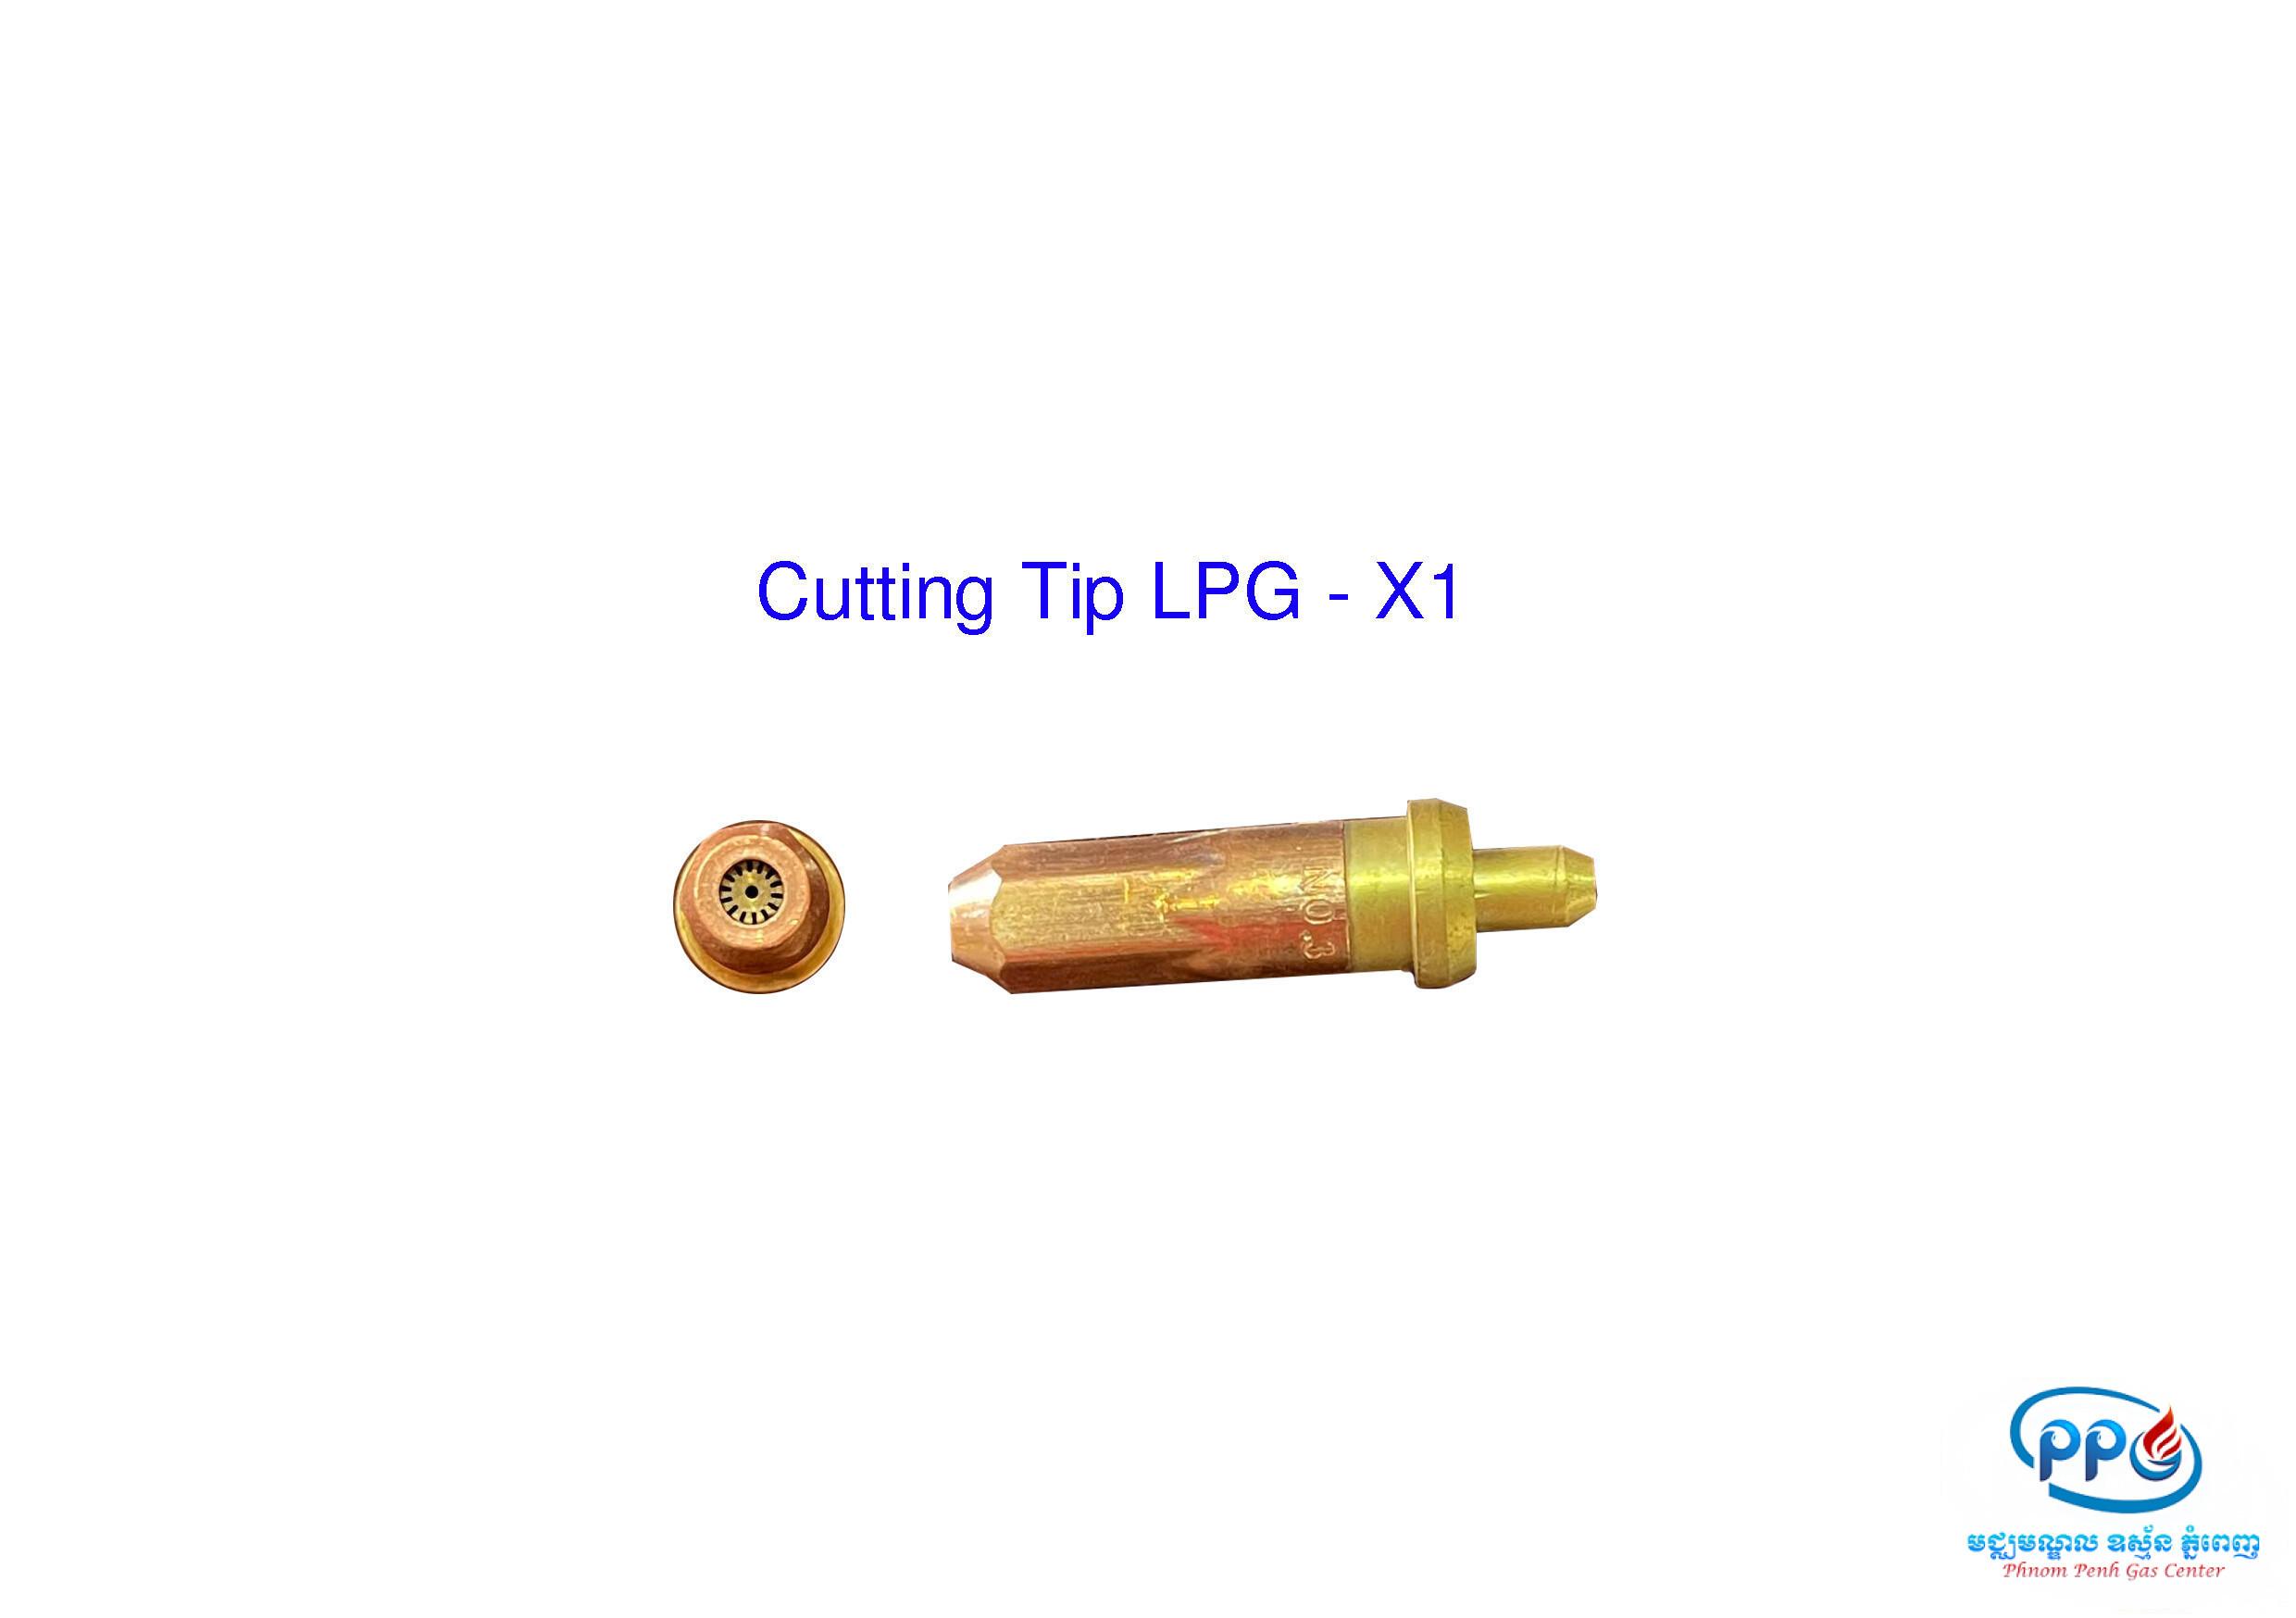 Cutting Tip LPG - X1 #1